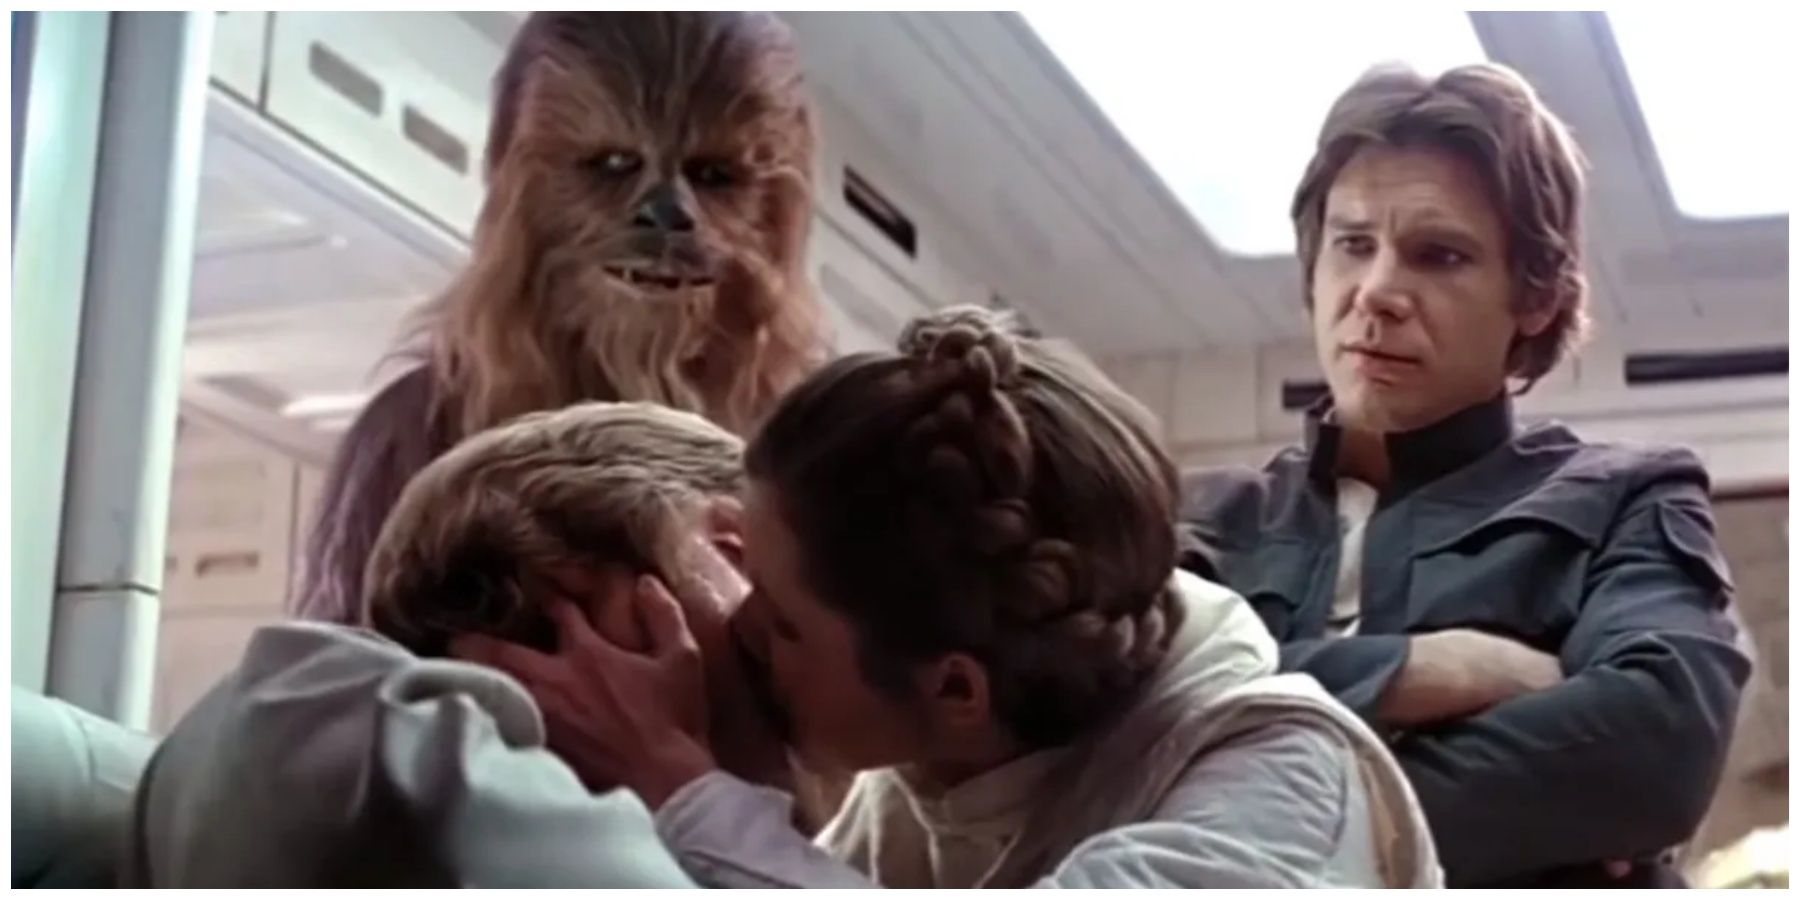 Peter Mayhew as Chewbacca. Mark Hamill as Luke Skywalker. Carrie Fisher as Leia Organa. Harrison Ford as Han Solo.